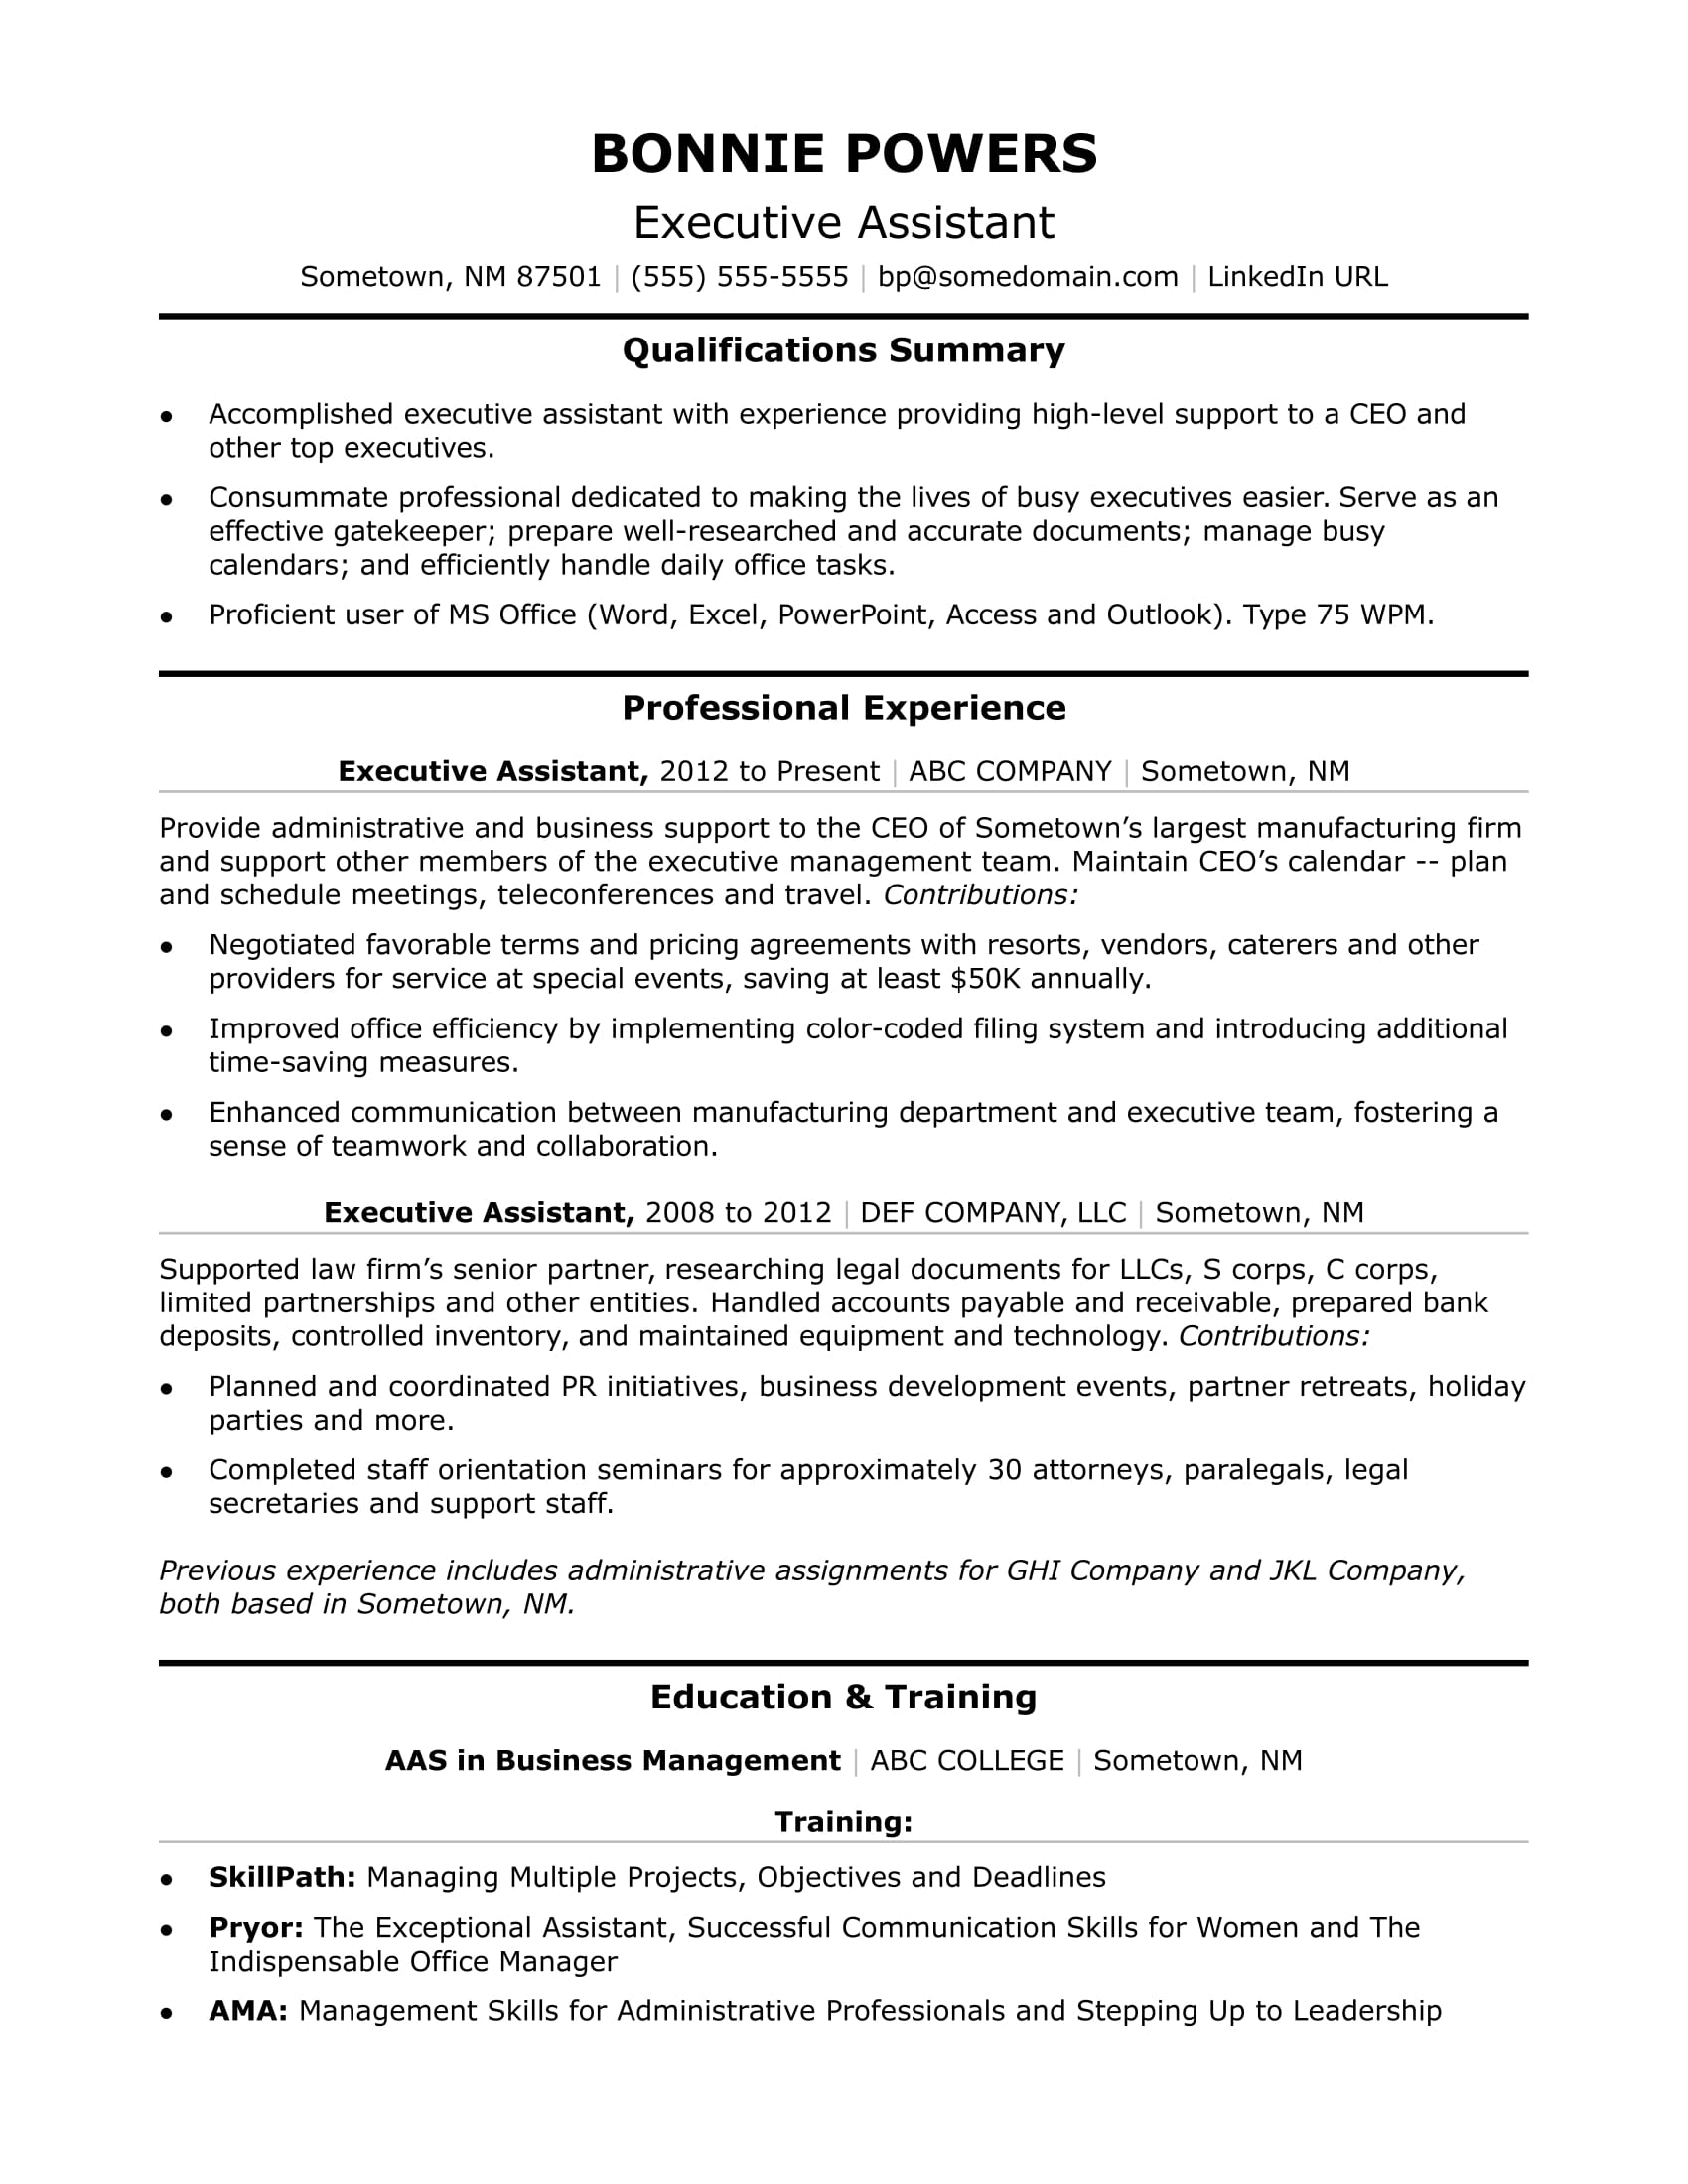 Executive Administrative Assistant Resume Sample | Monster.com